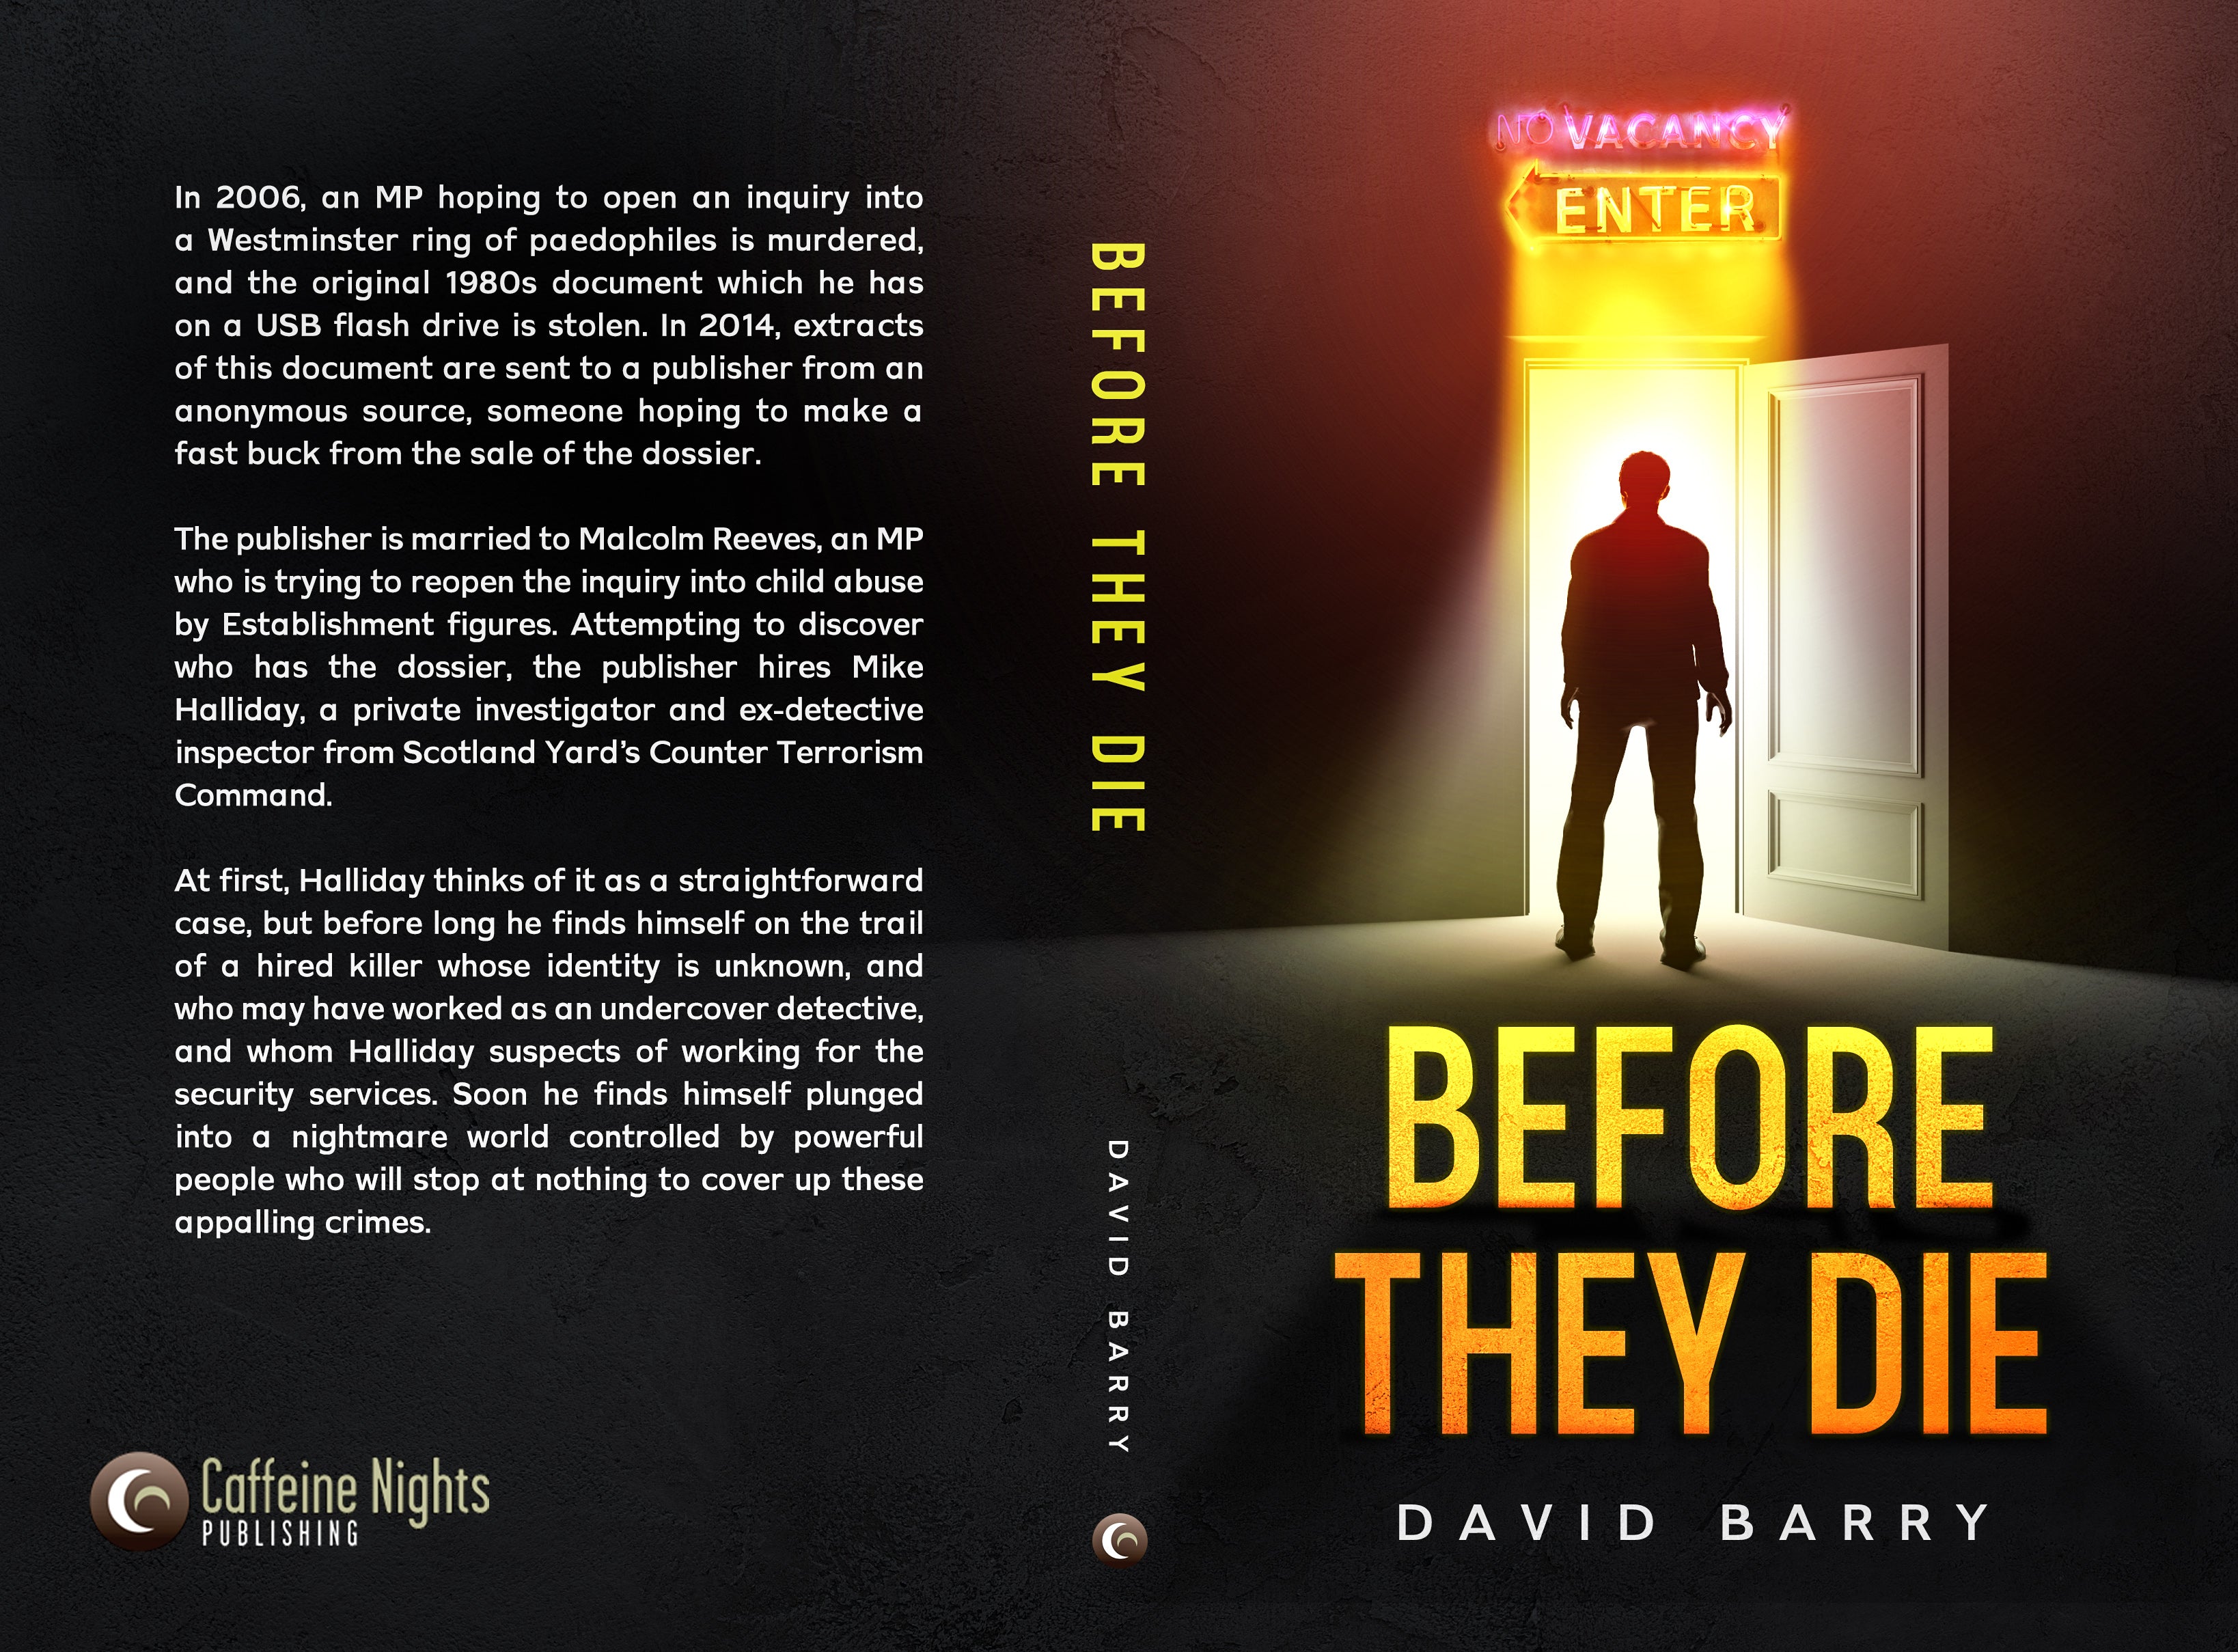 David Barry thriller author